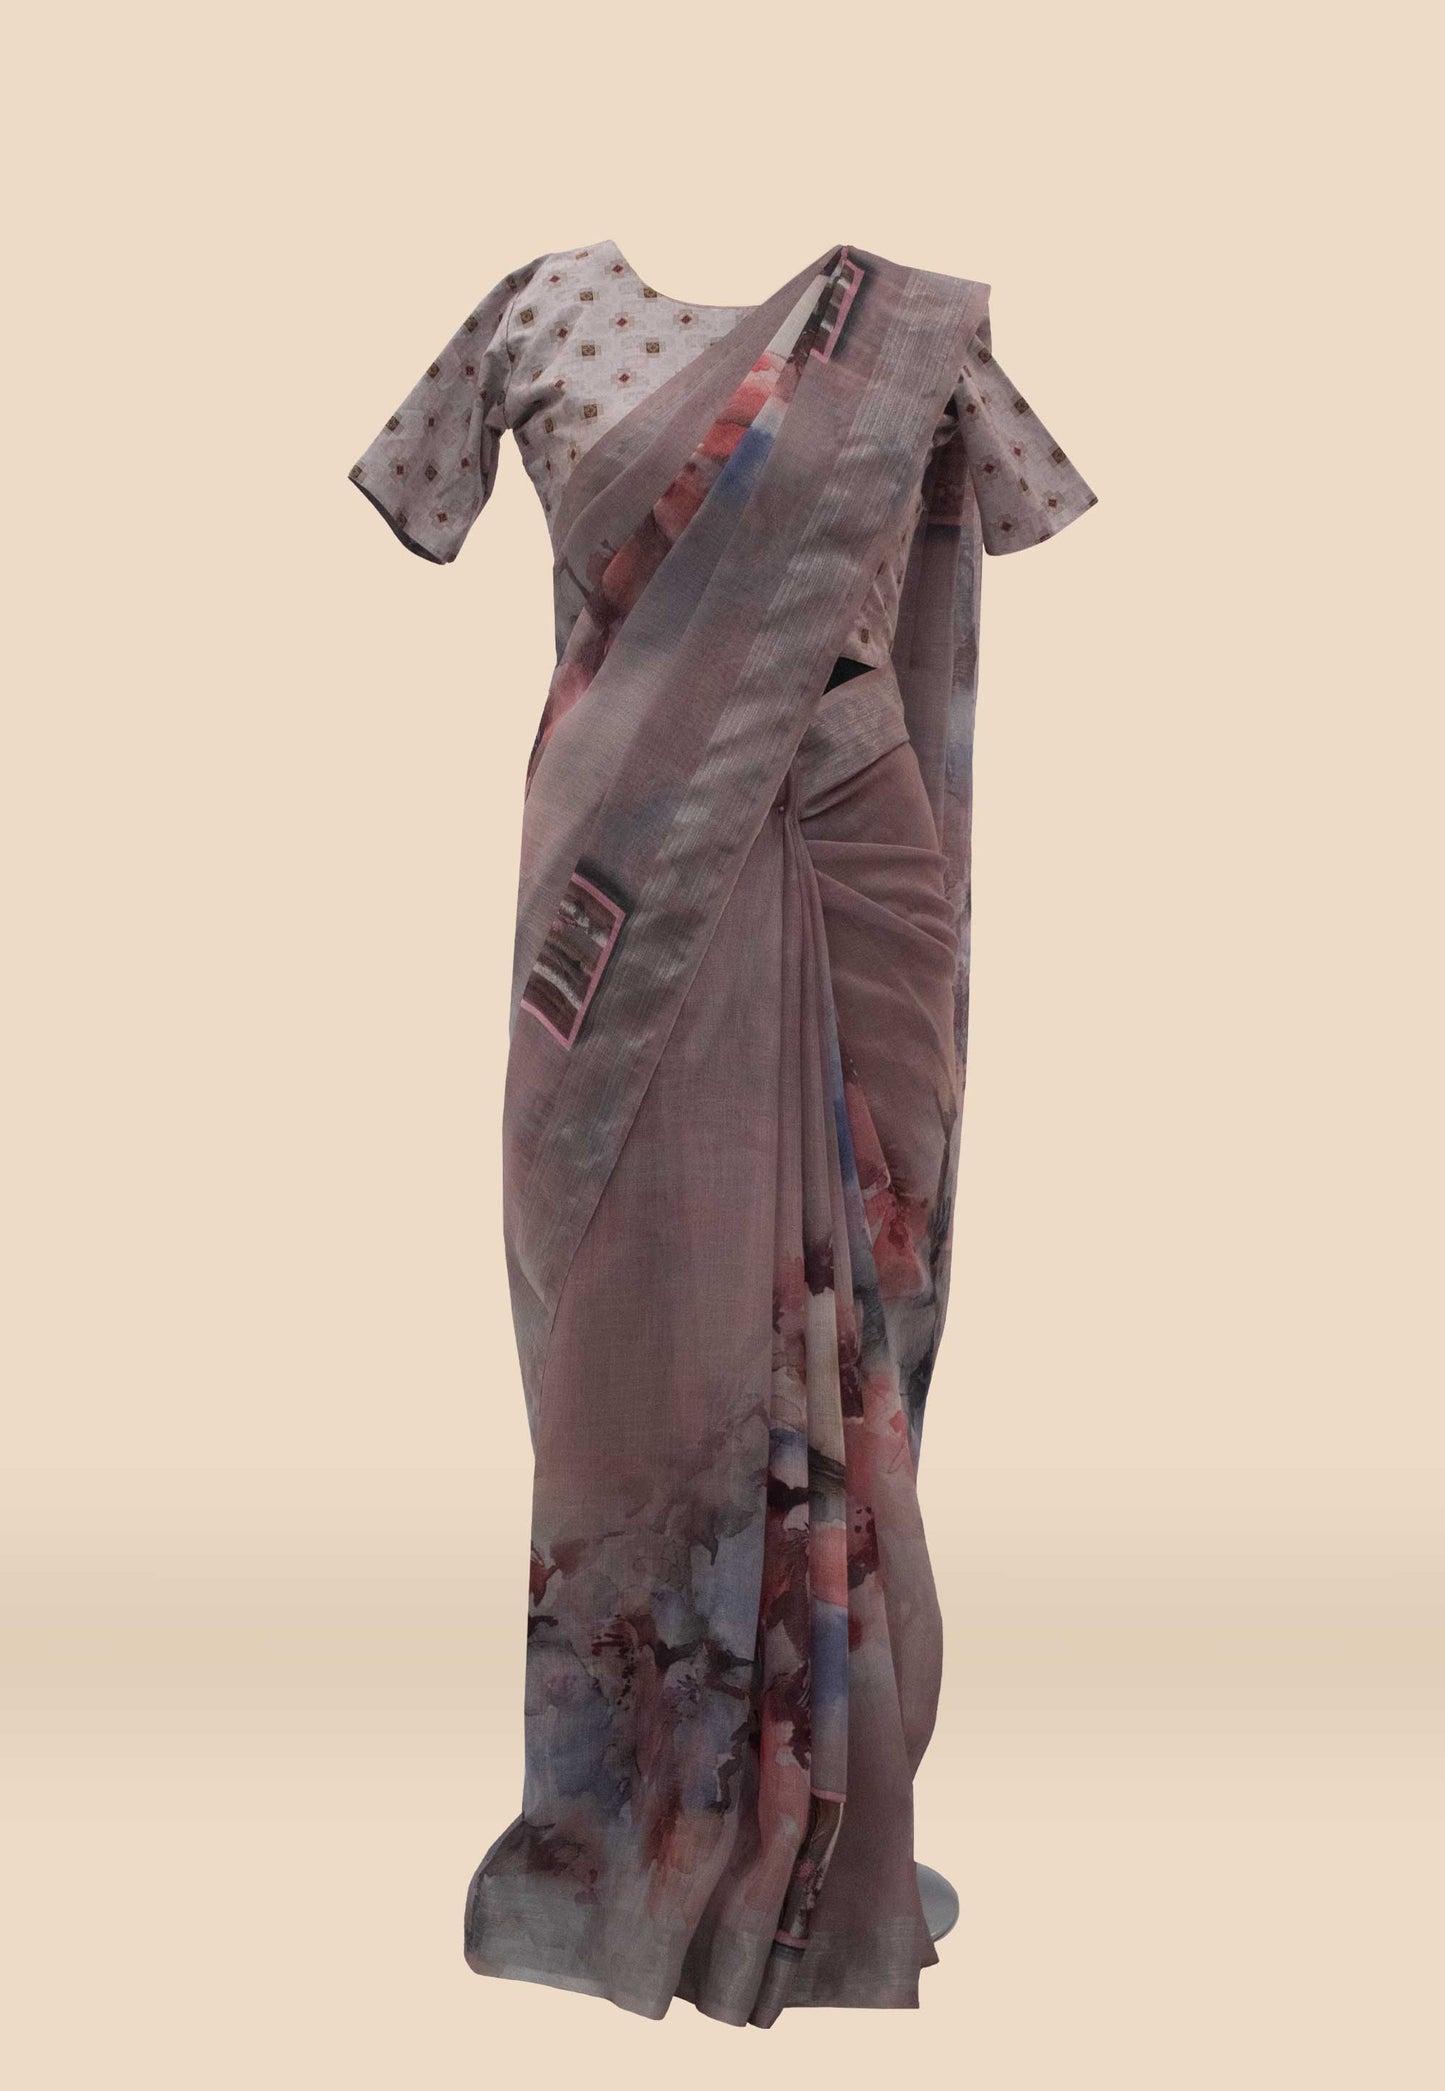 Digital Printed Linen Saree in Grey